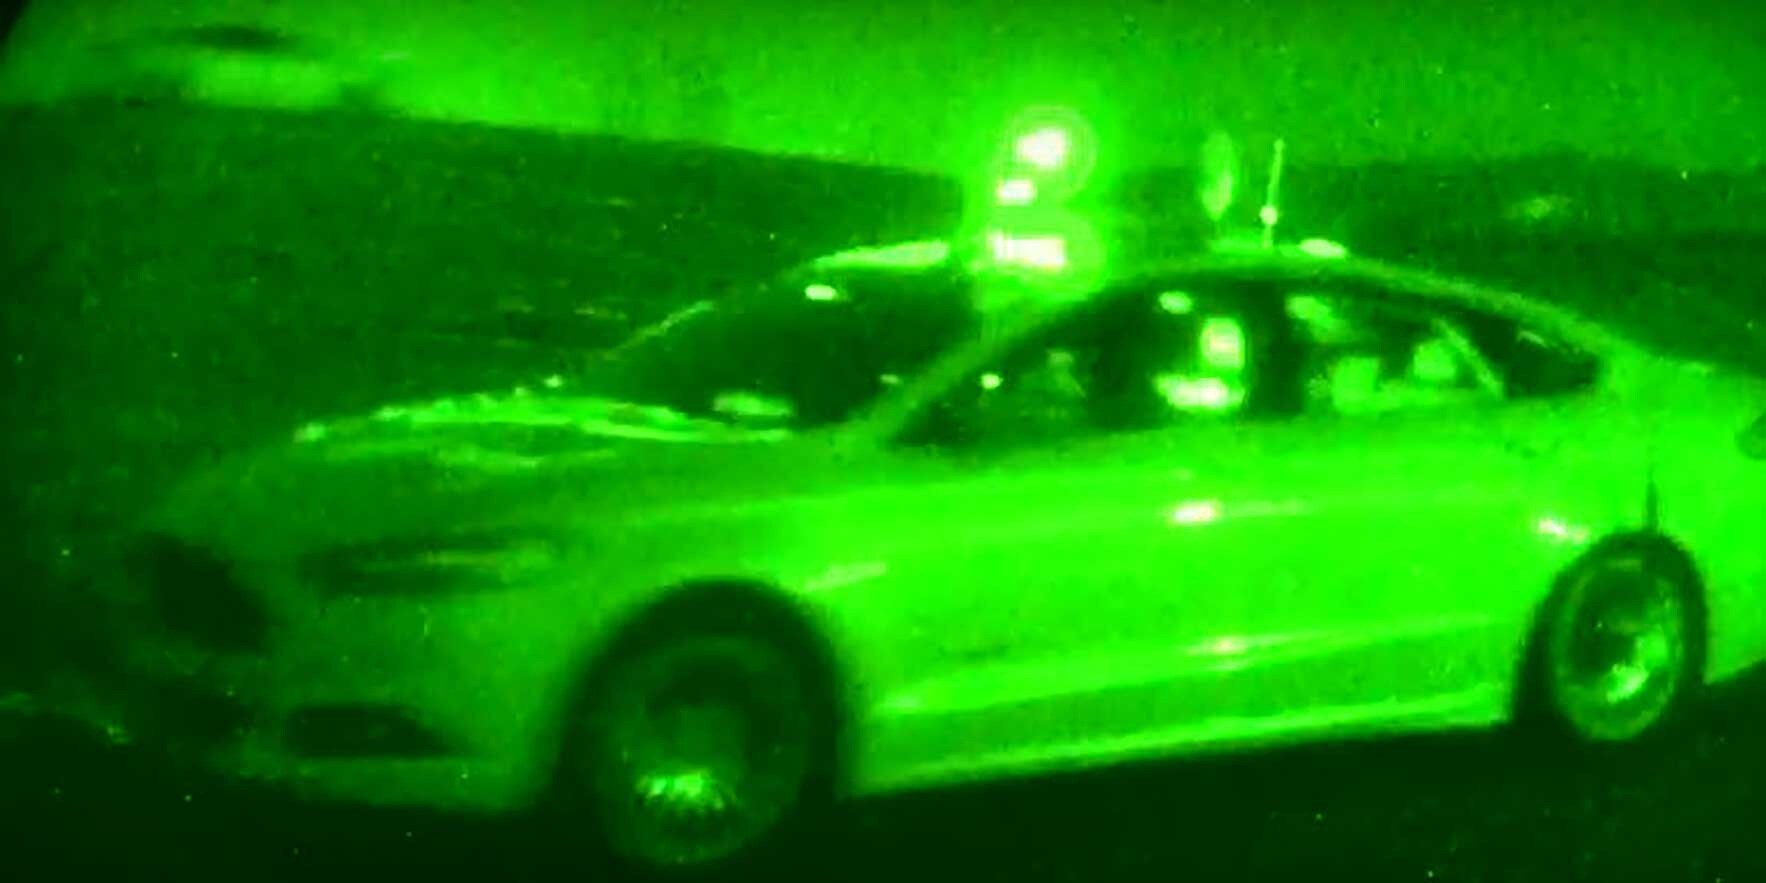 Techblog - Ford test zelfrijdende auto in het donker